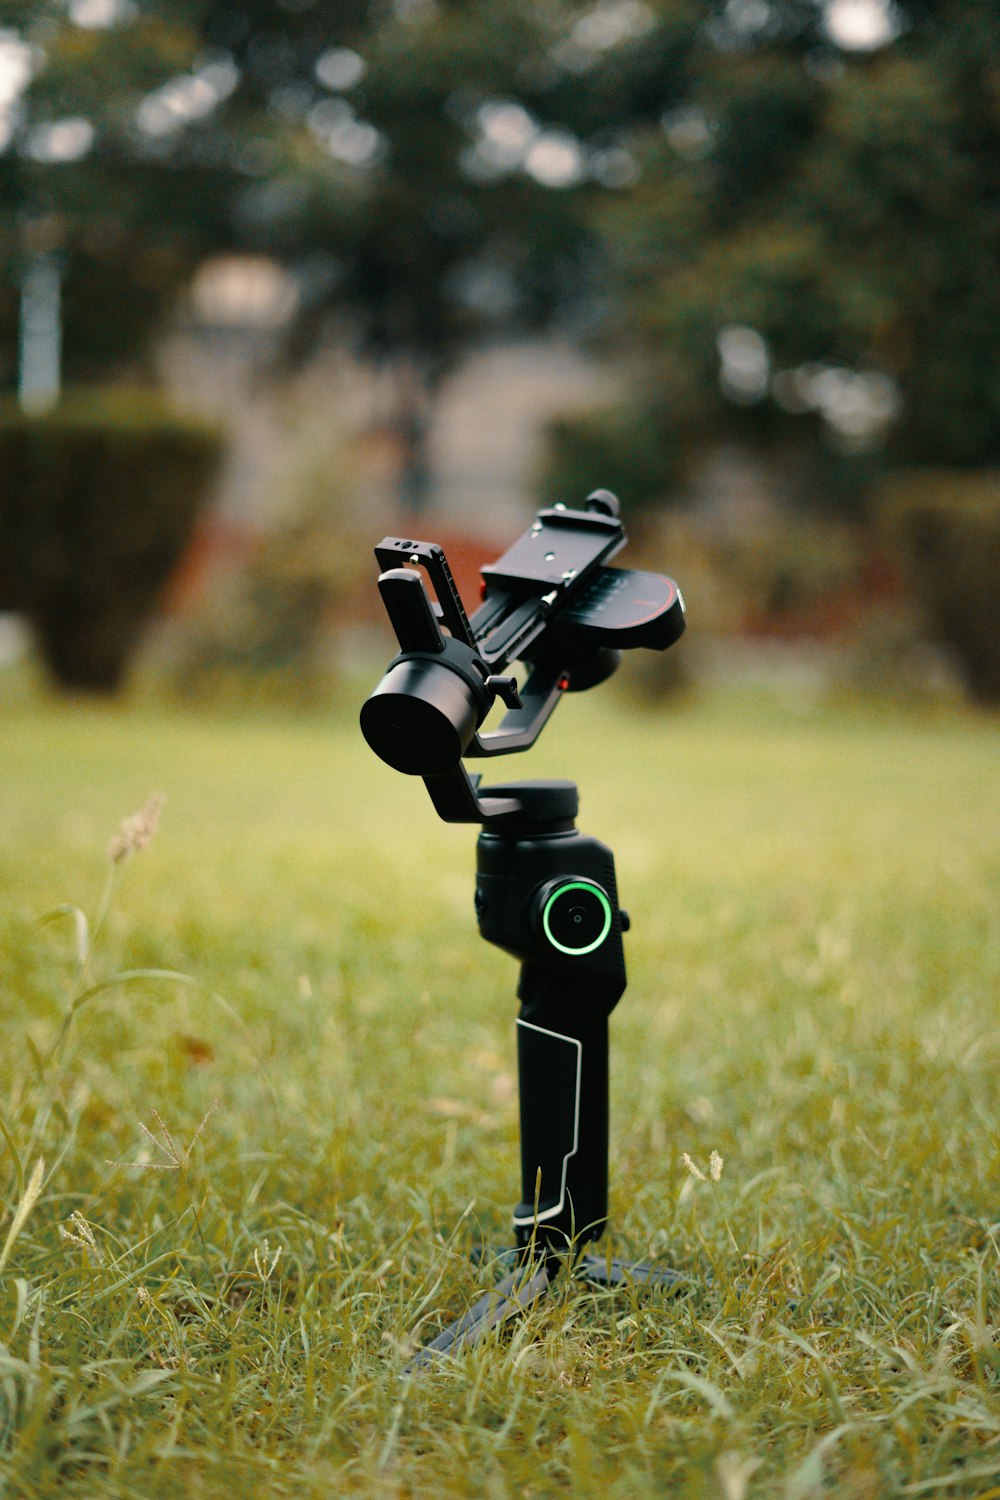 a camera on a tripod in a grassy field